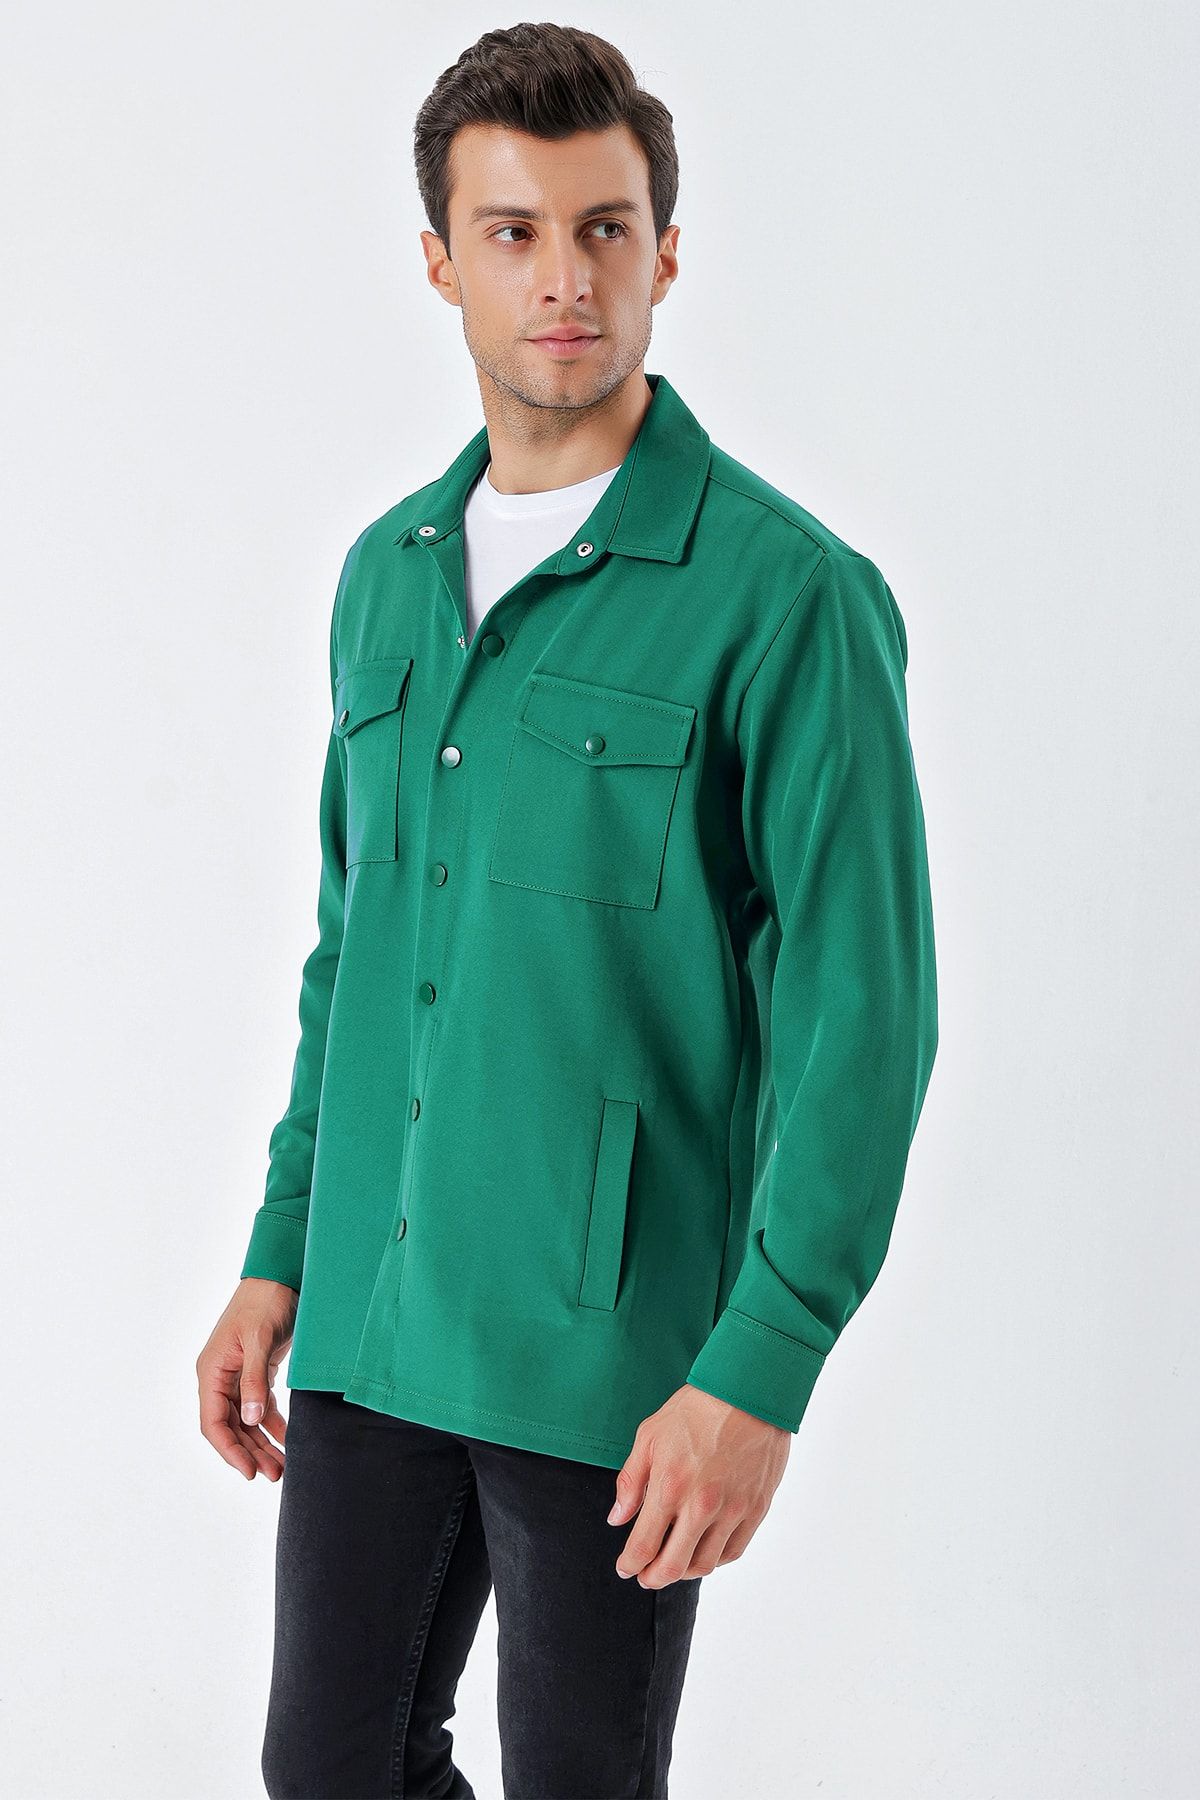 Bigdart پیراهن مردانه بزرگ 20193 - سبز زمردی